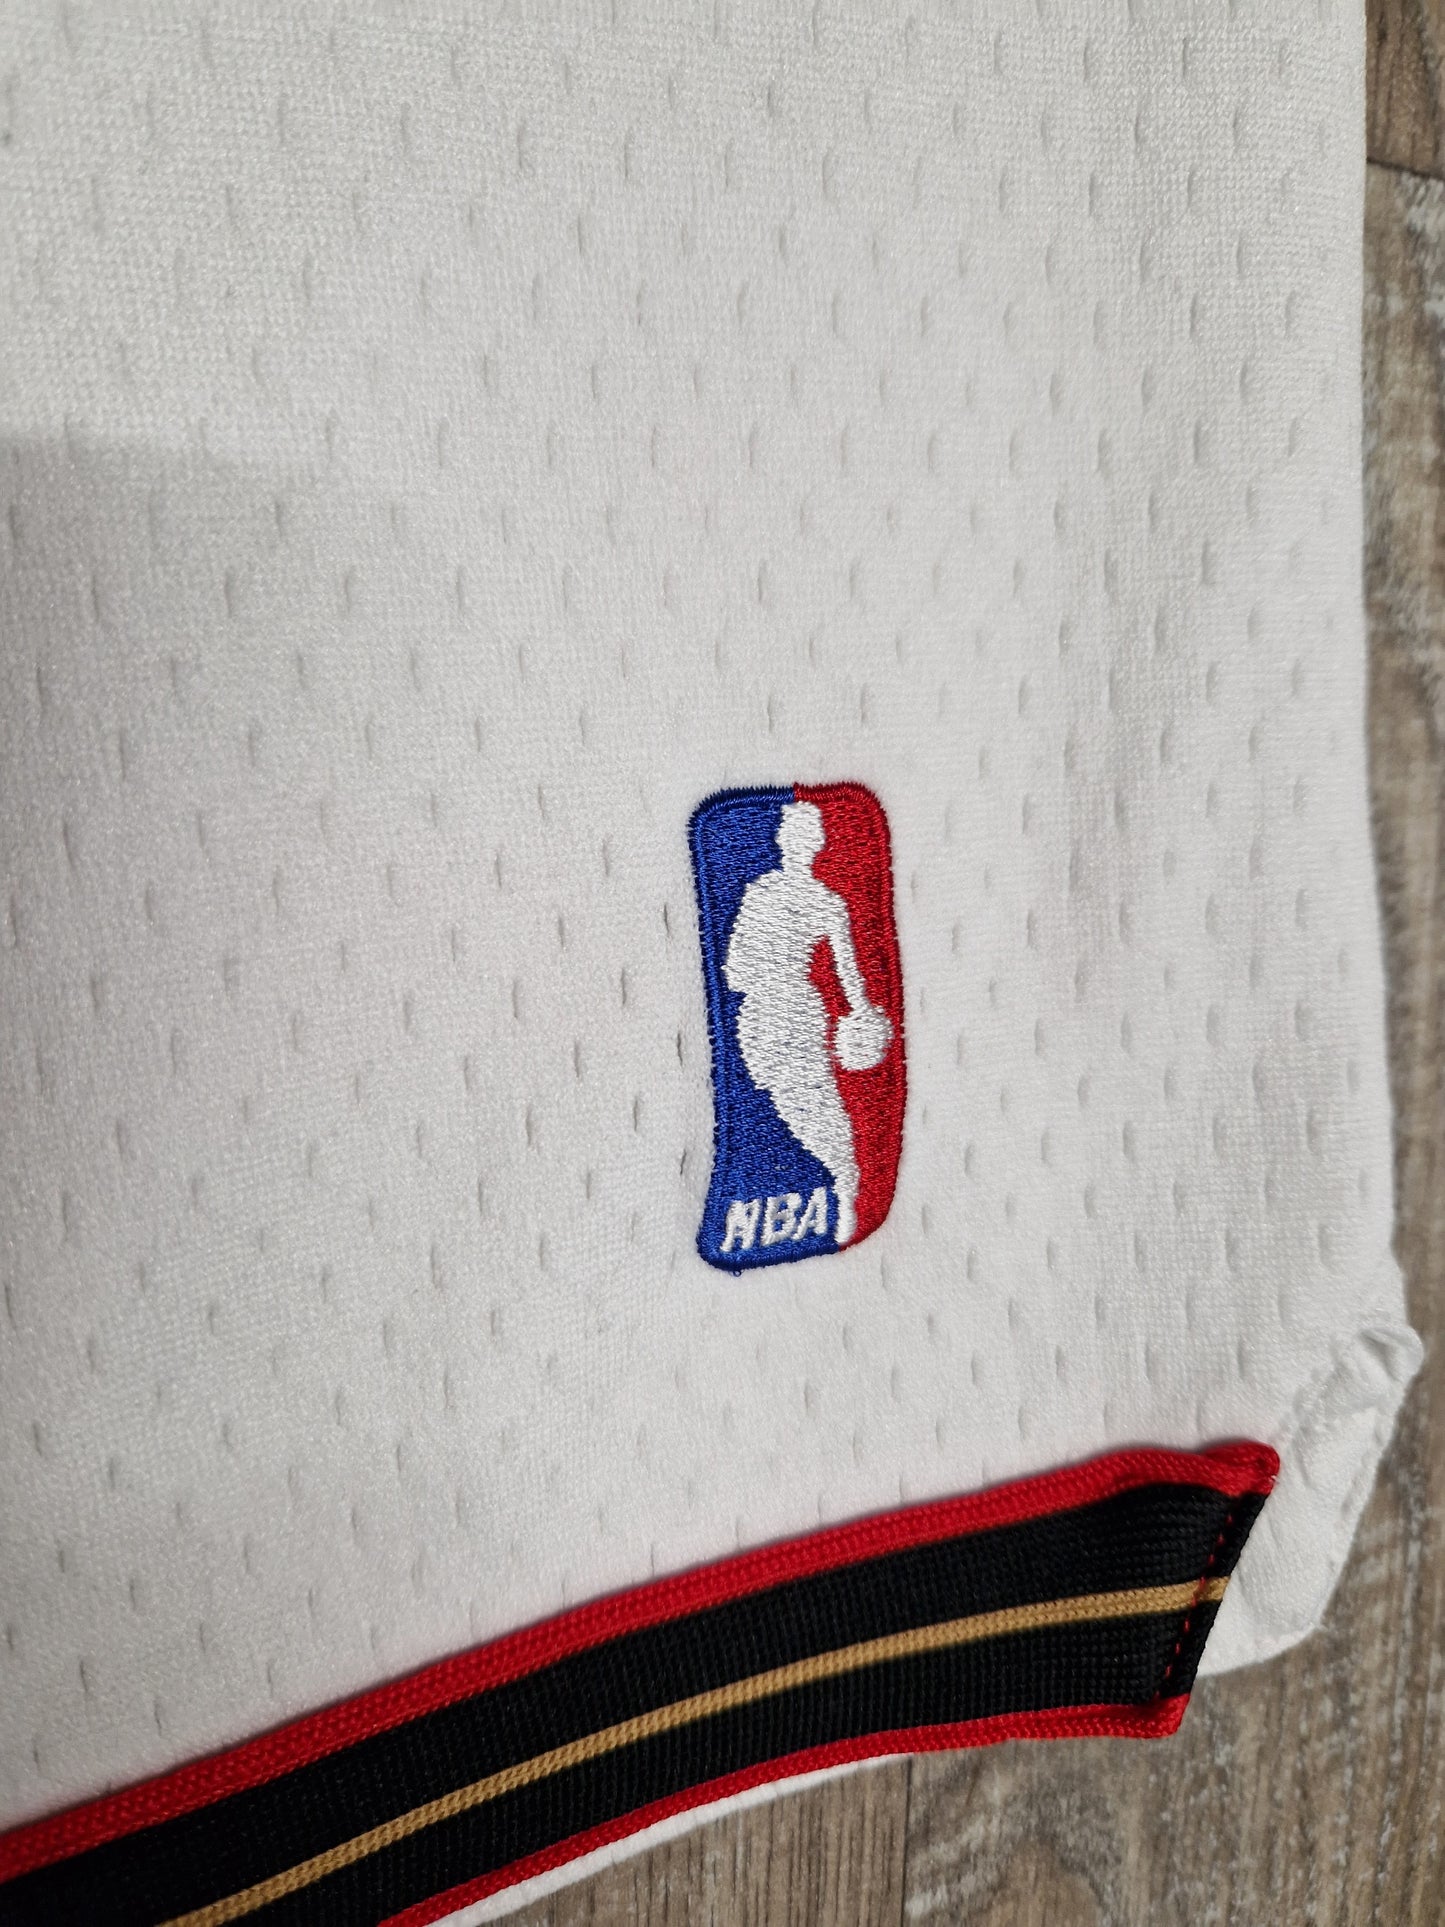 Philadelphia 76ers Authentic Shorts Size Small